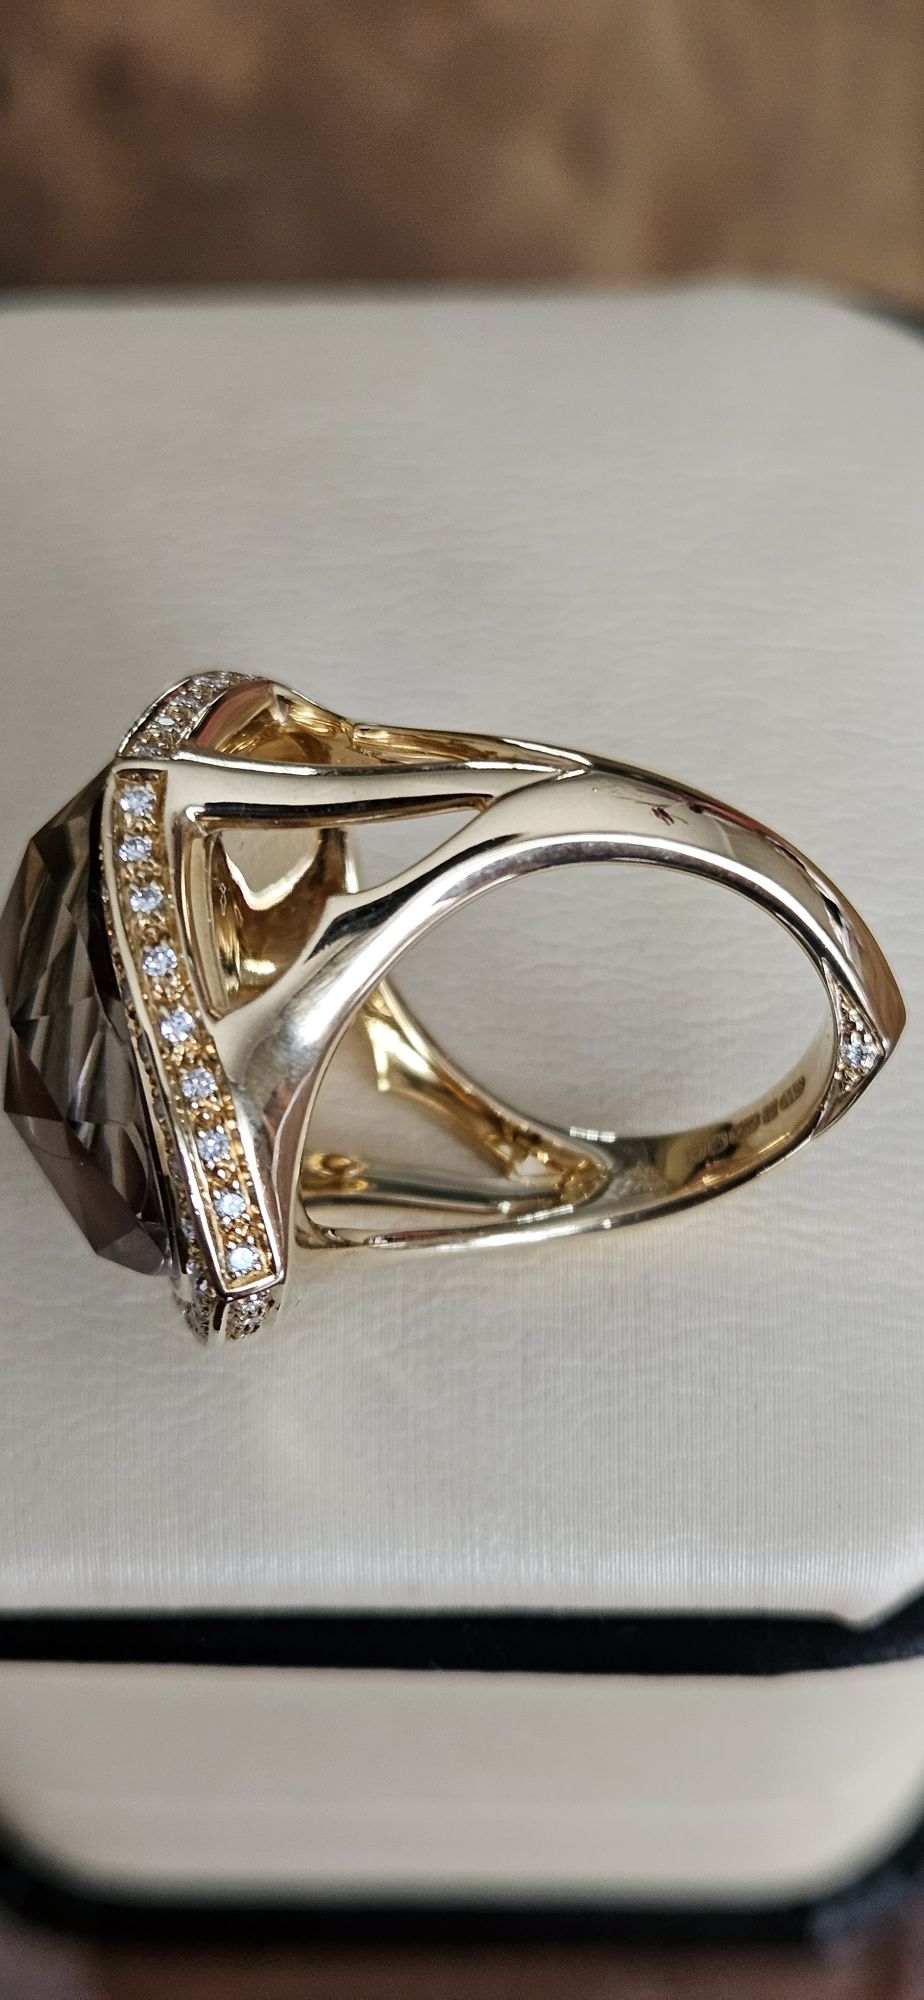 Бренд Stephen Webster . Золотое кольцо 750 пробы с бриллиантами.